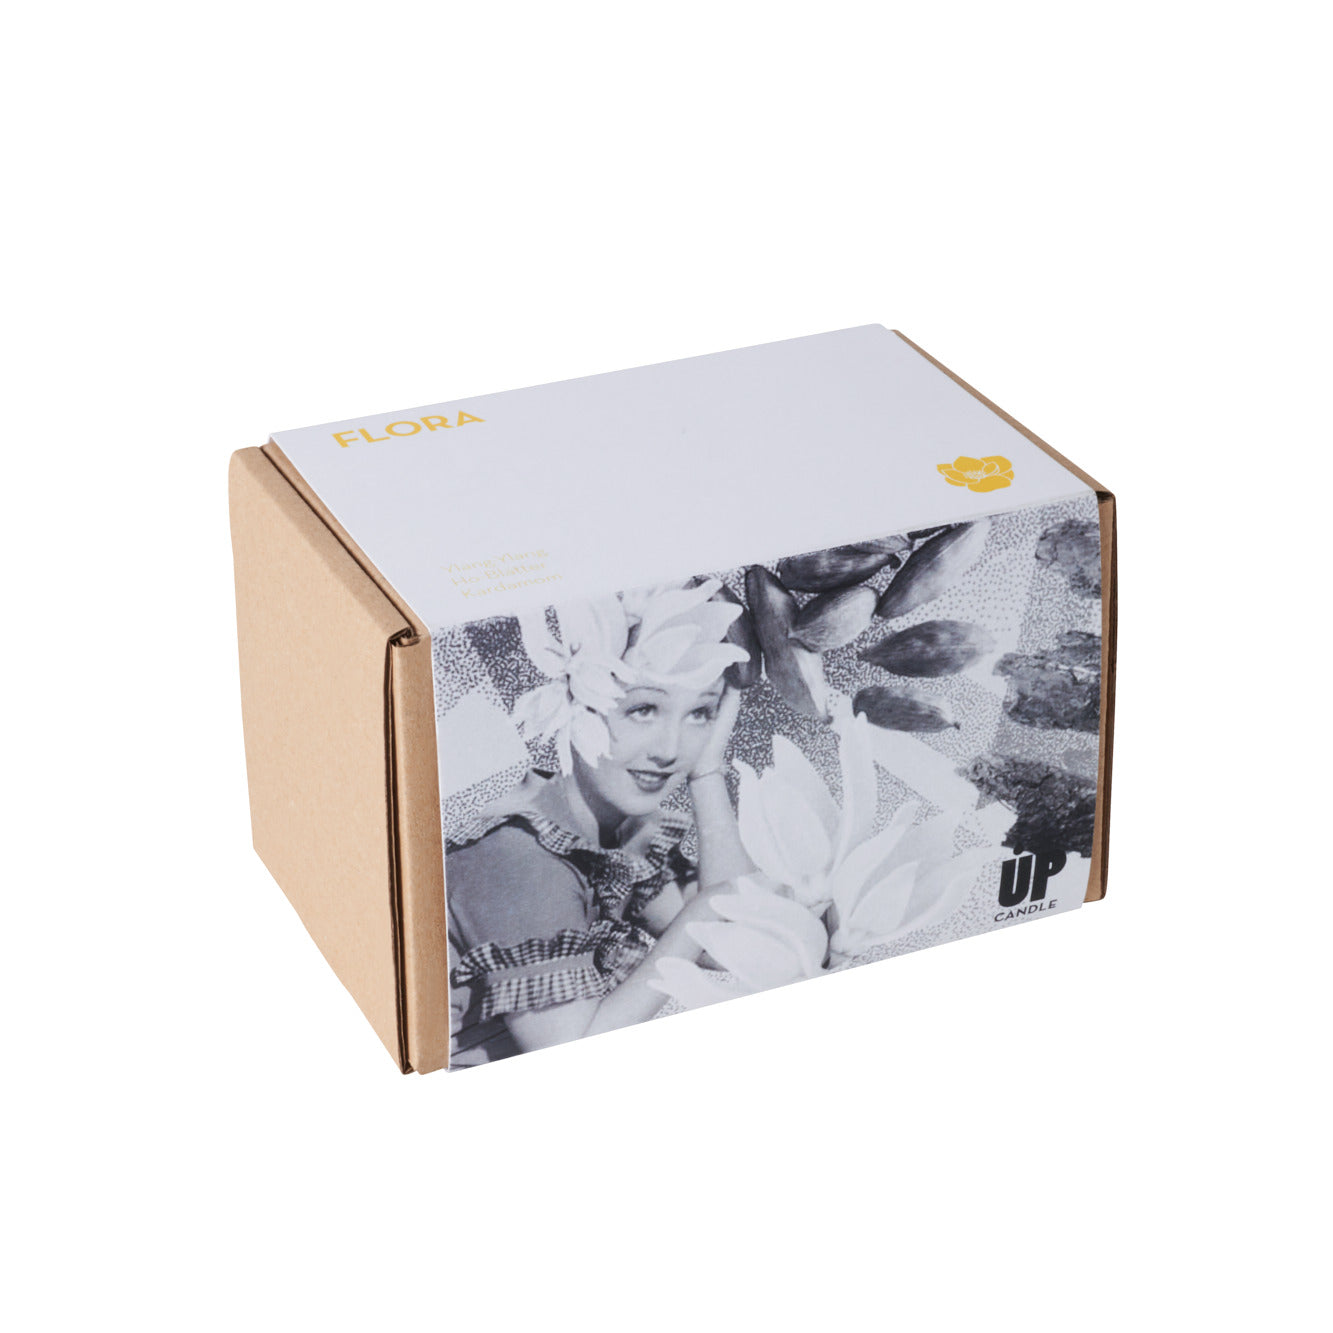 upcandle_Flora Packaging_01